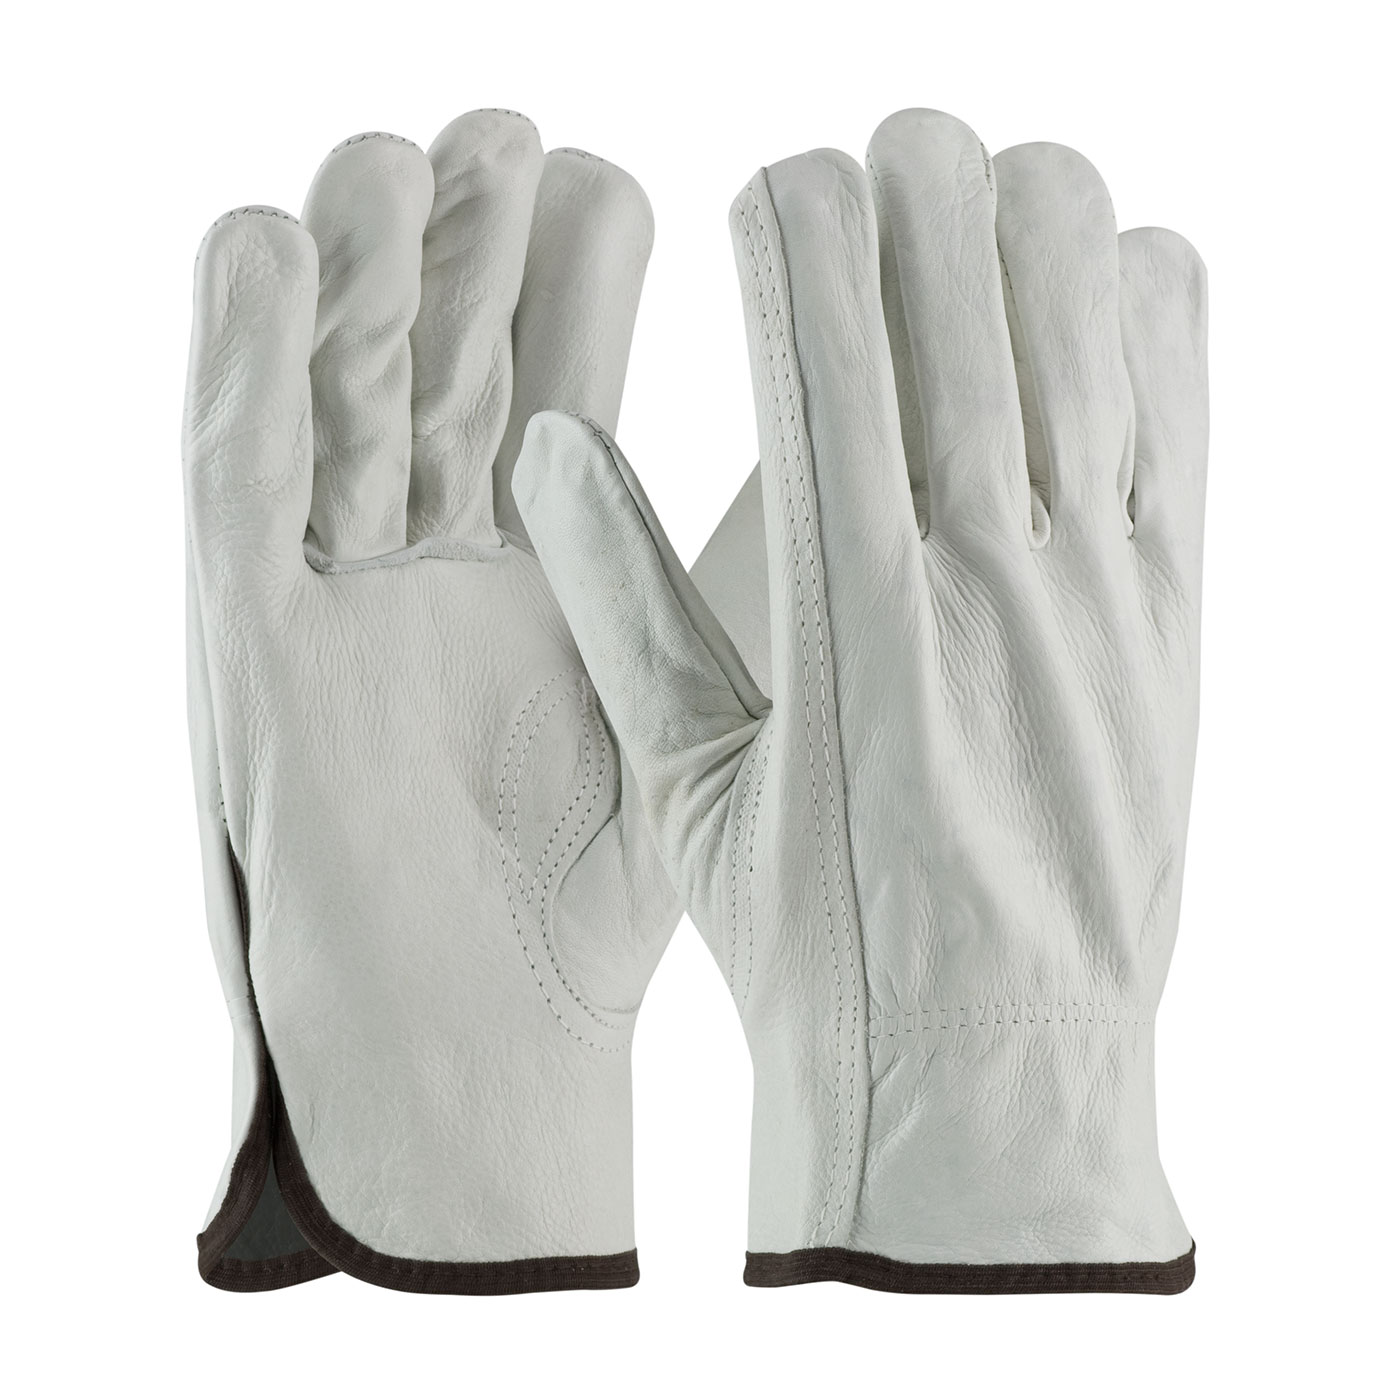 PIP 68-163/XL Regular Grade Top Grain Cowhide Leather Drivers Glove - Keystone Thumb - X-Large PID-68 163 XL